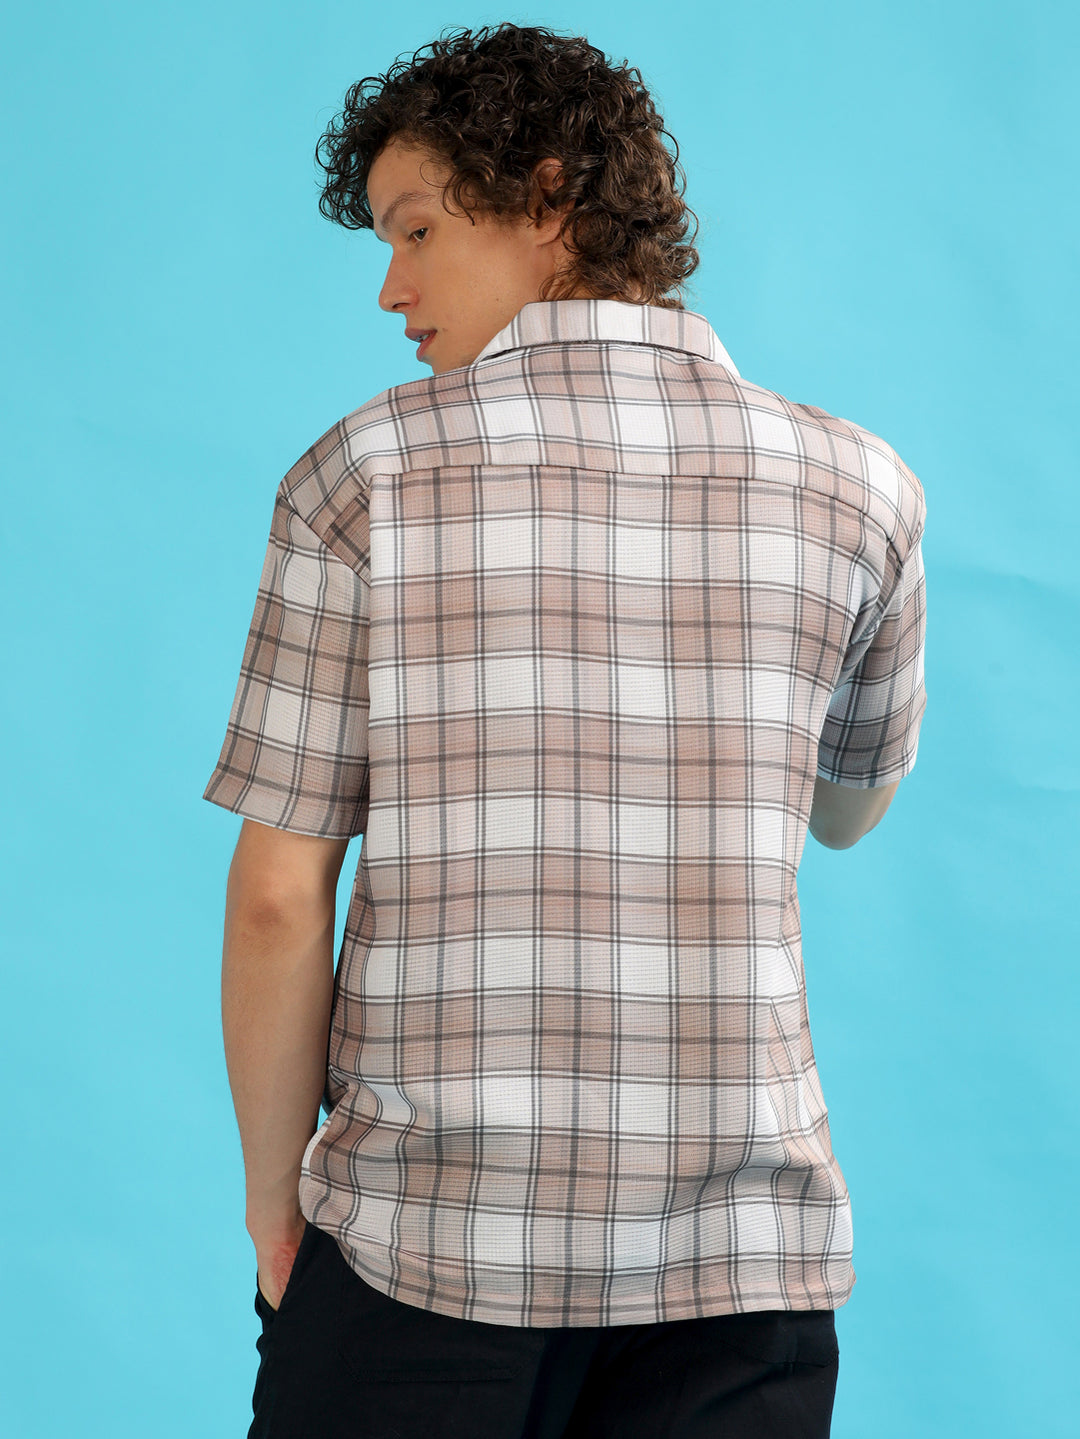 Tartan Square Brown Checks Oversize Shirt Oversize Printed Shirt Bushirt   